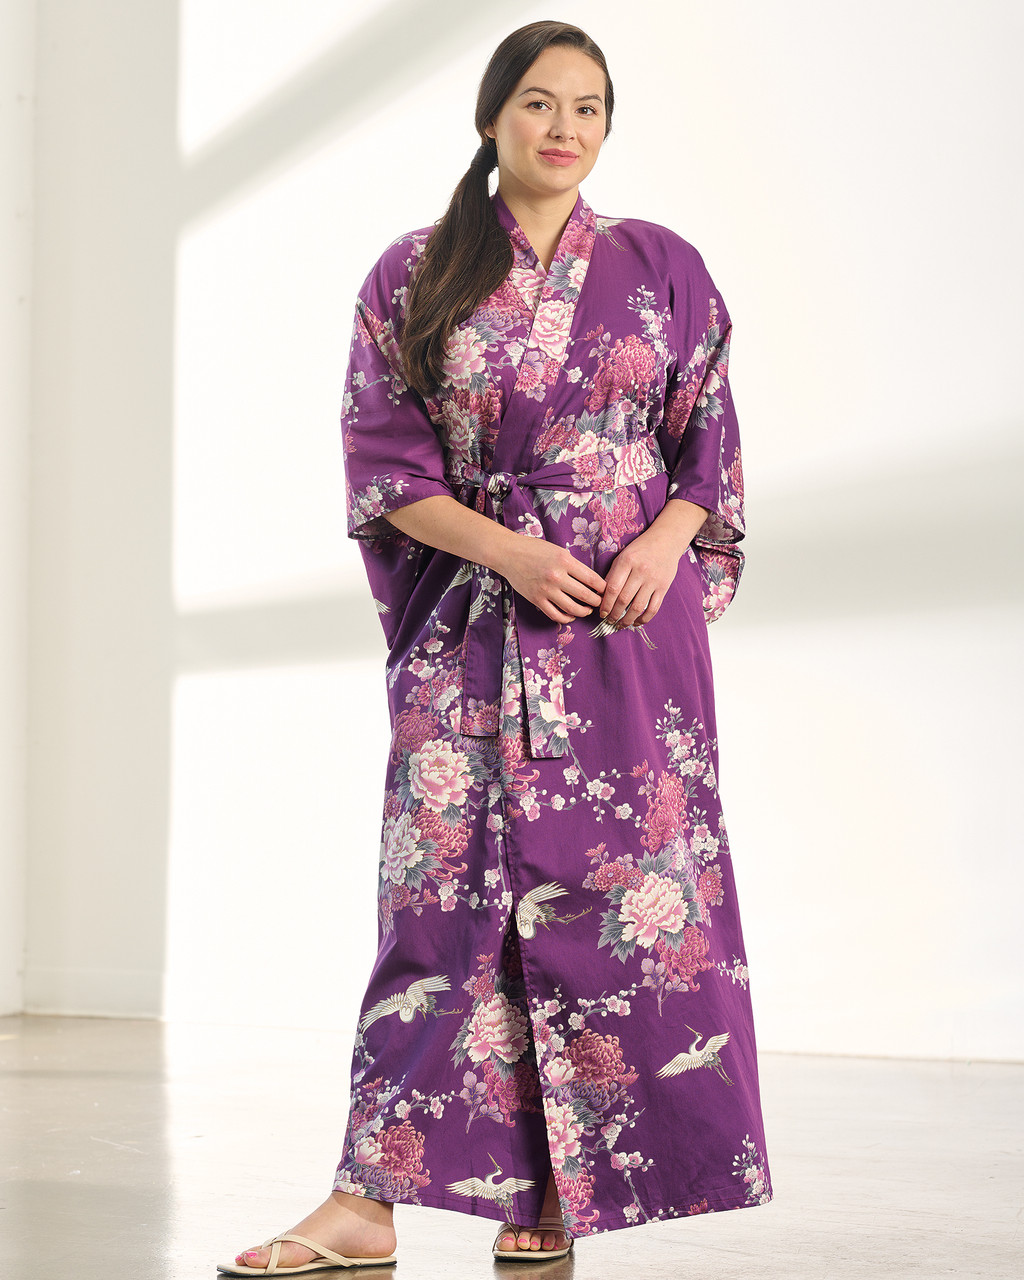 Black Silky Kimono Robe / Japanese Dressing Gown / Long Satin Bathrobe /  Luxury Christmas Gift for Wife Mom Girlfriend - Etsy | Kimono de satén,  Bata de kimono, Ropa de mujer